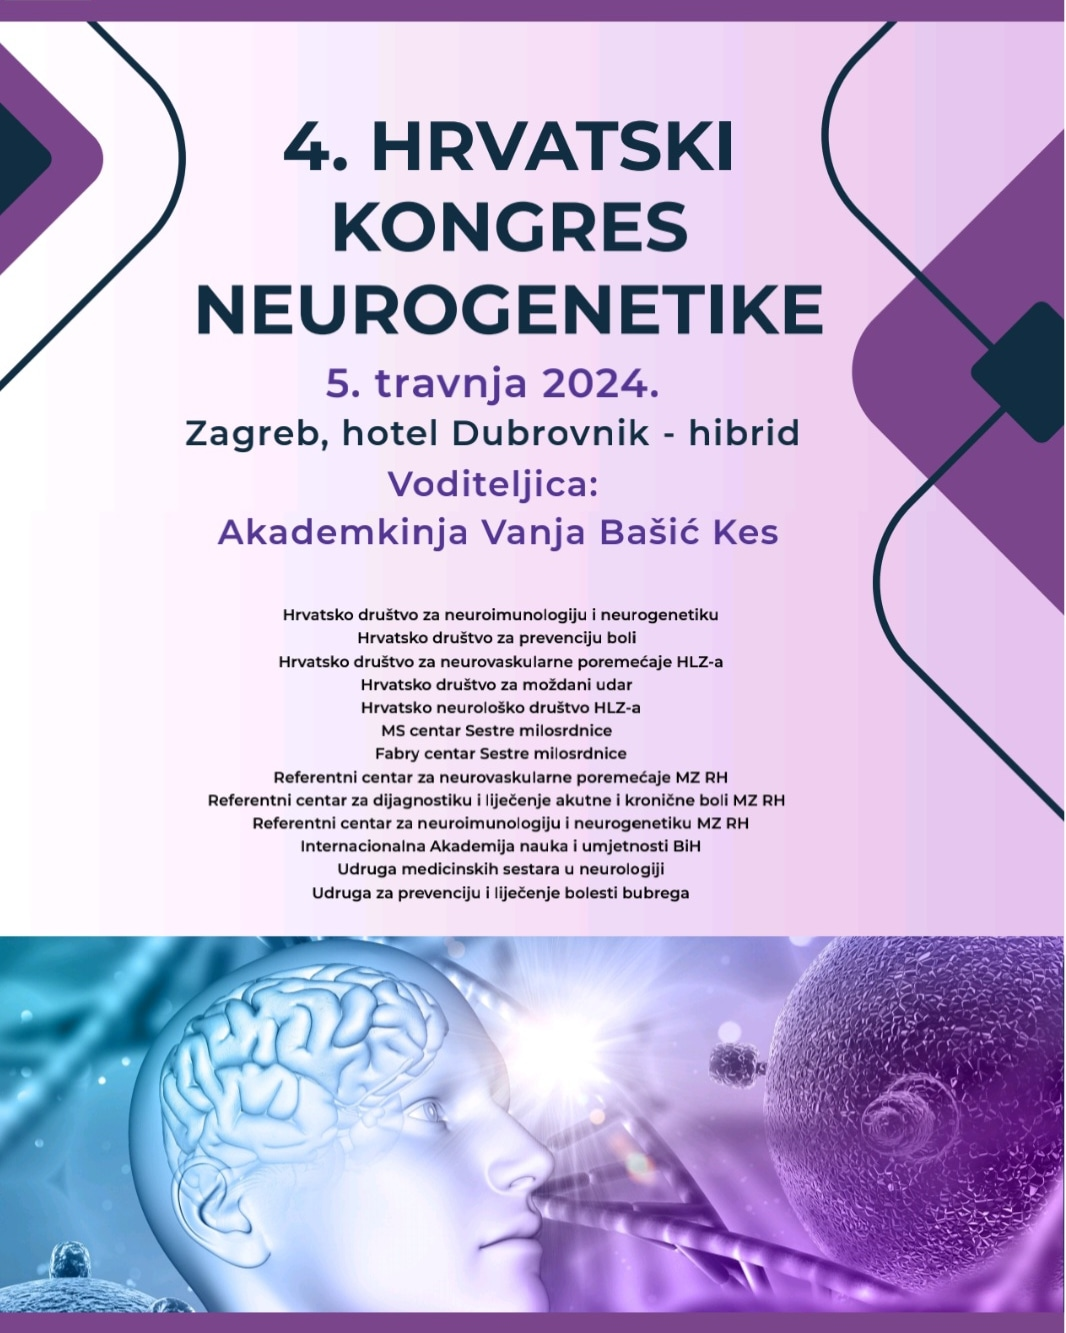 ~/Content/Images/News/Neurogenetika4.PNG